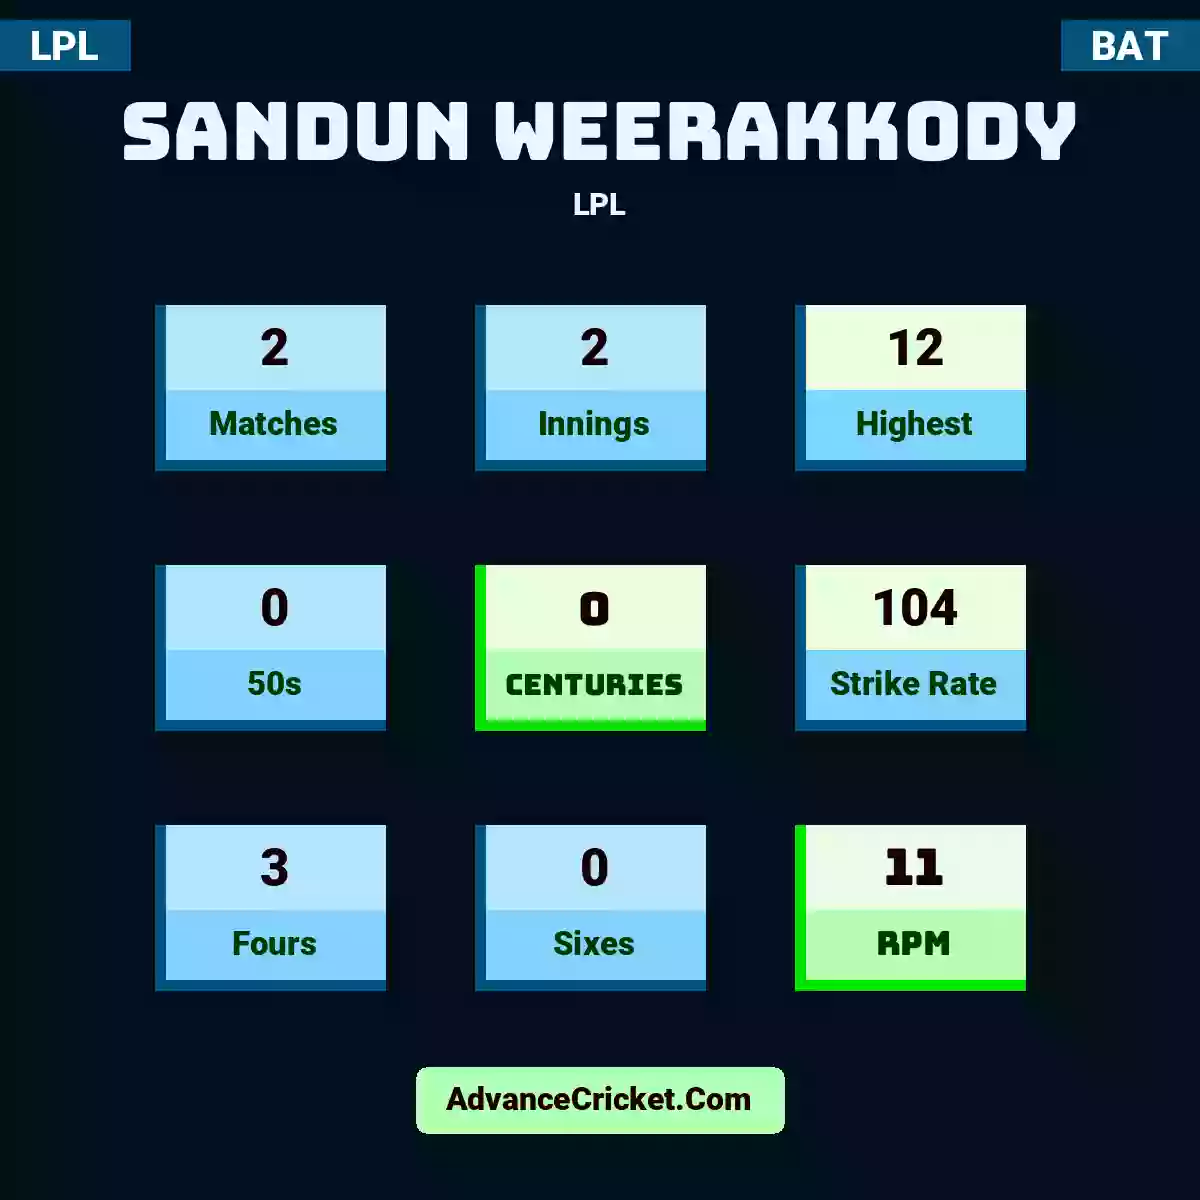 Sandun Weerakkody LPL , Sandun Weerakkody played 2 matches, scored 12 runs as highest, 0 half-centuries, and 0 centuries, with a strike rate of 104. S.Weerakkody hit 3 fours and 0 sixes, with an RPM of 11.